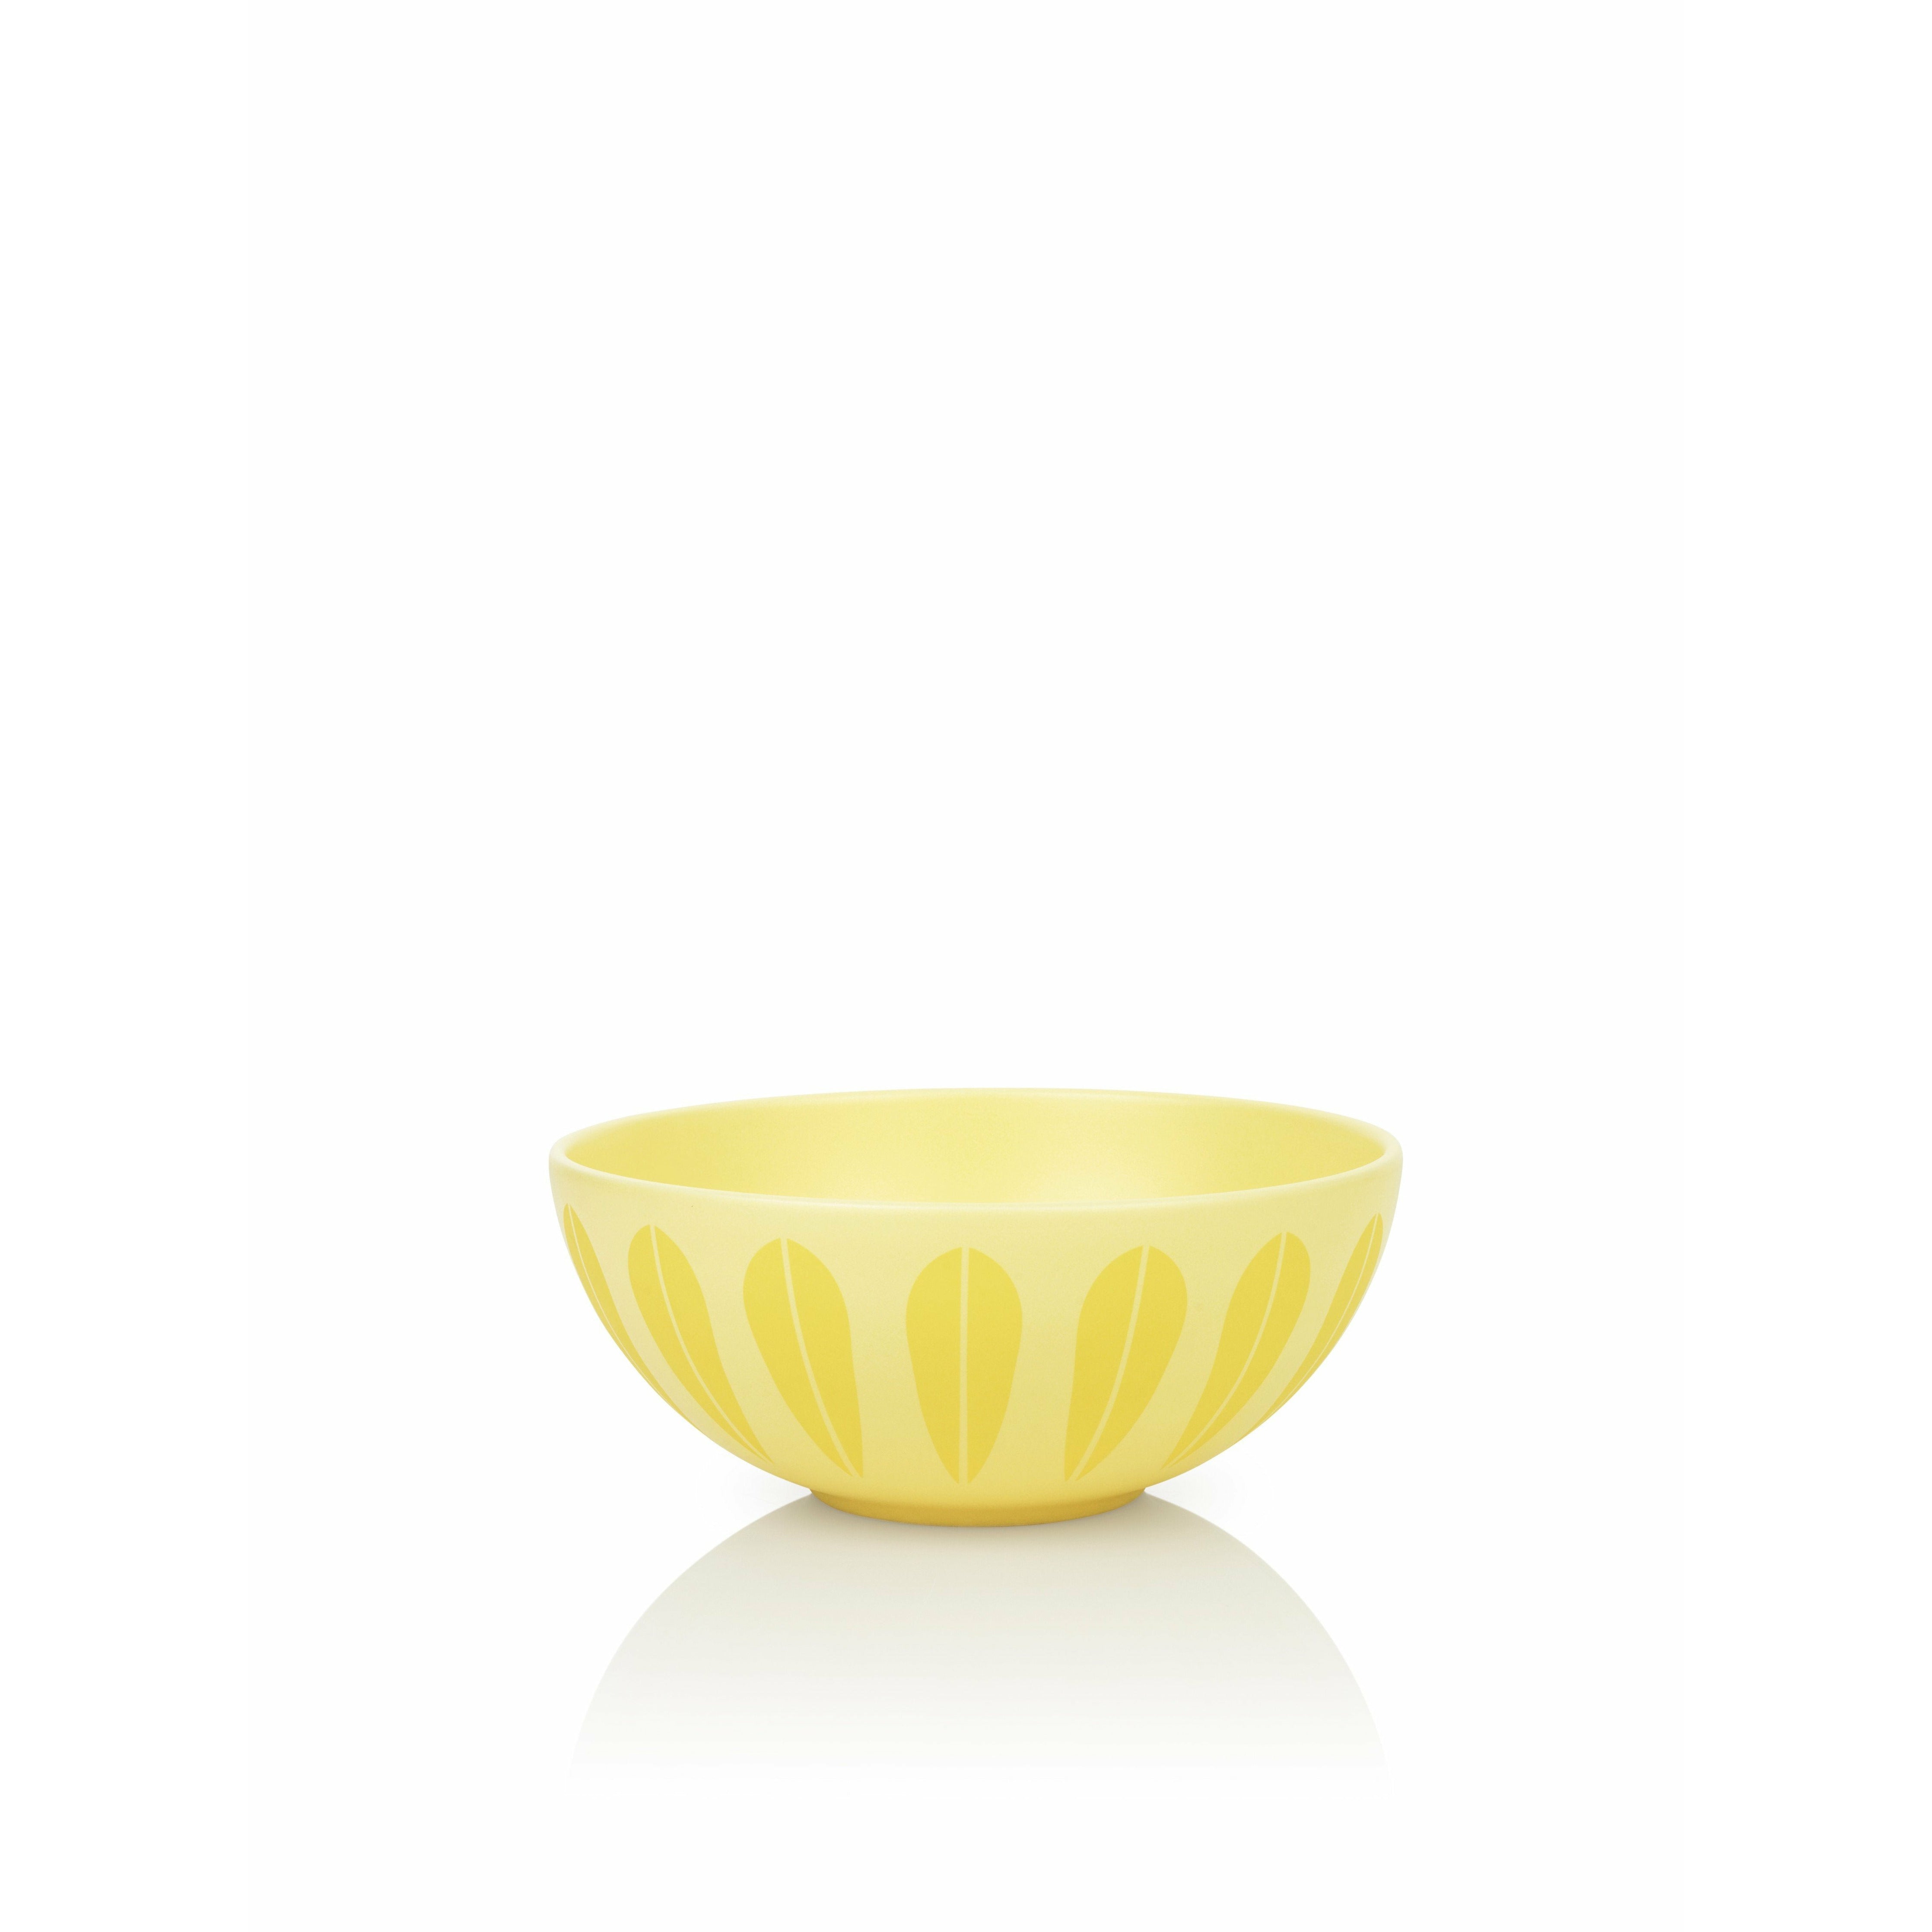 Lucie Kaas Arne Clausen Lotus Bowl amarillo, Ø24 cm